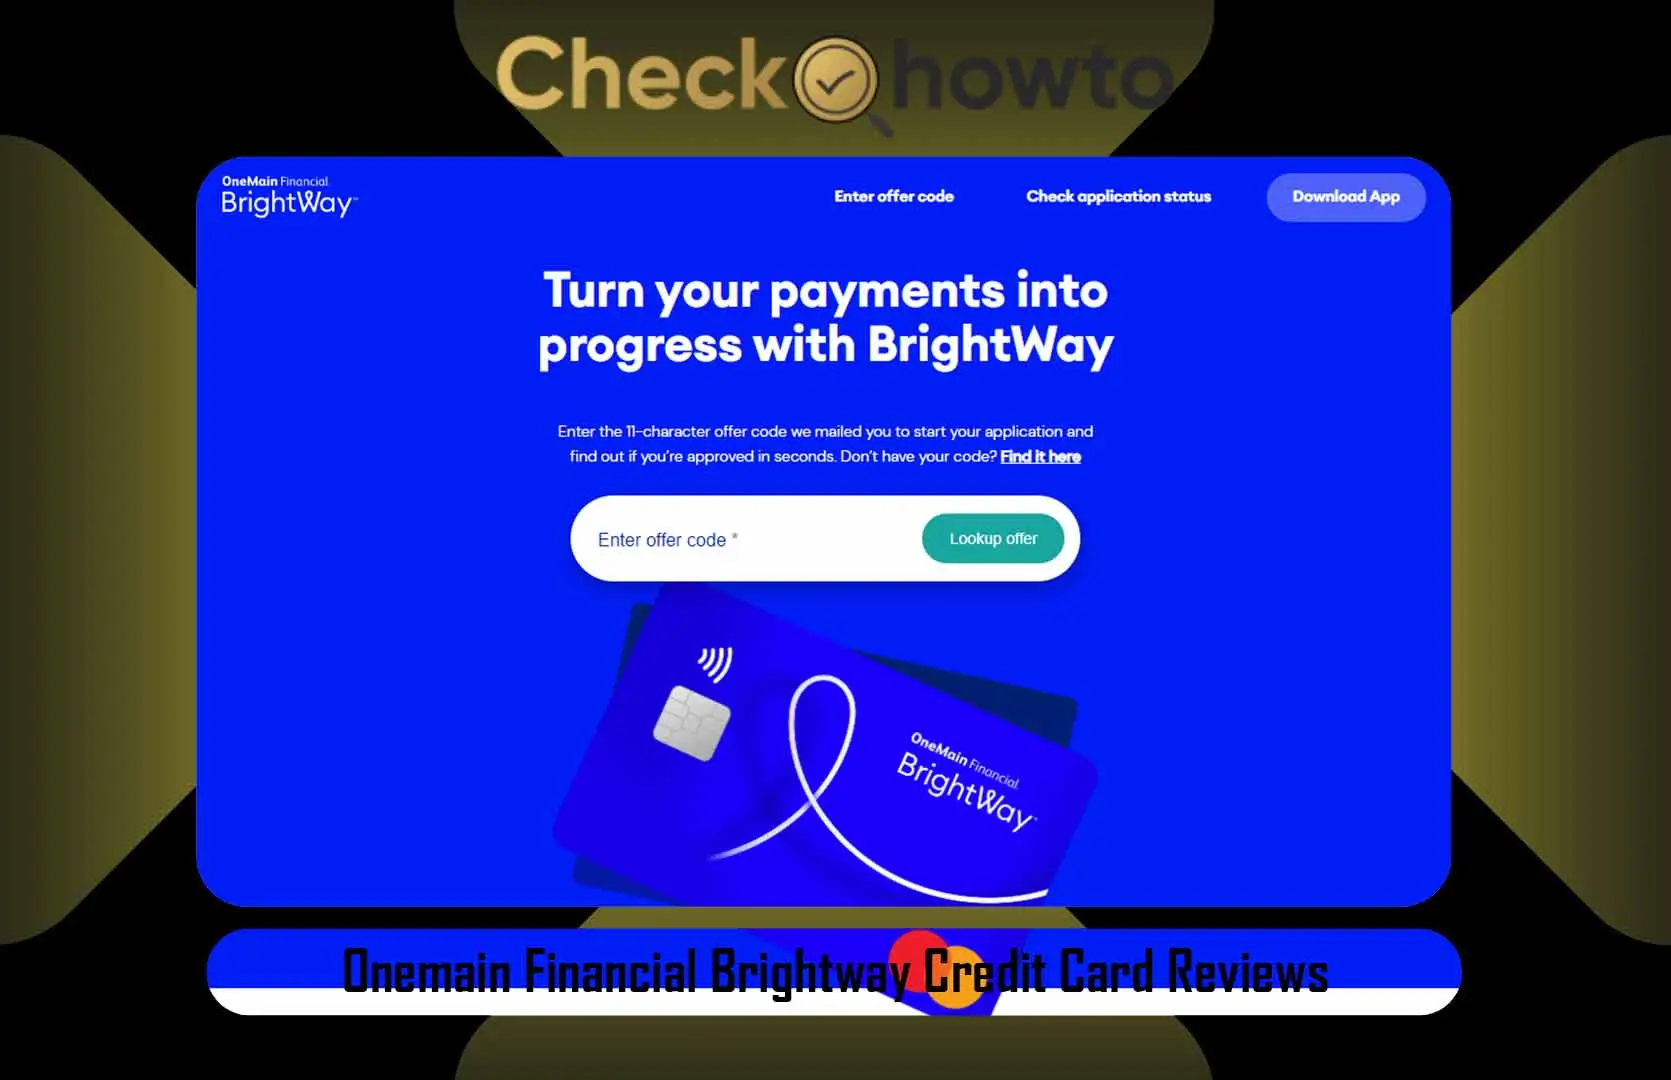 Onemain Financial Brightway Credit Card Reviews